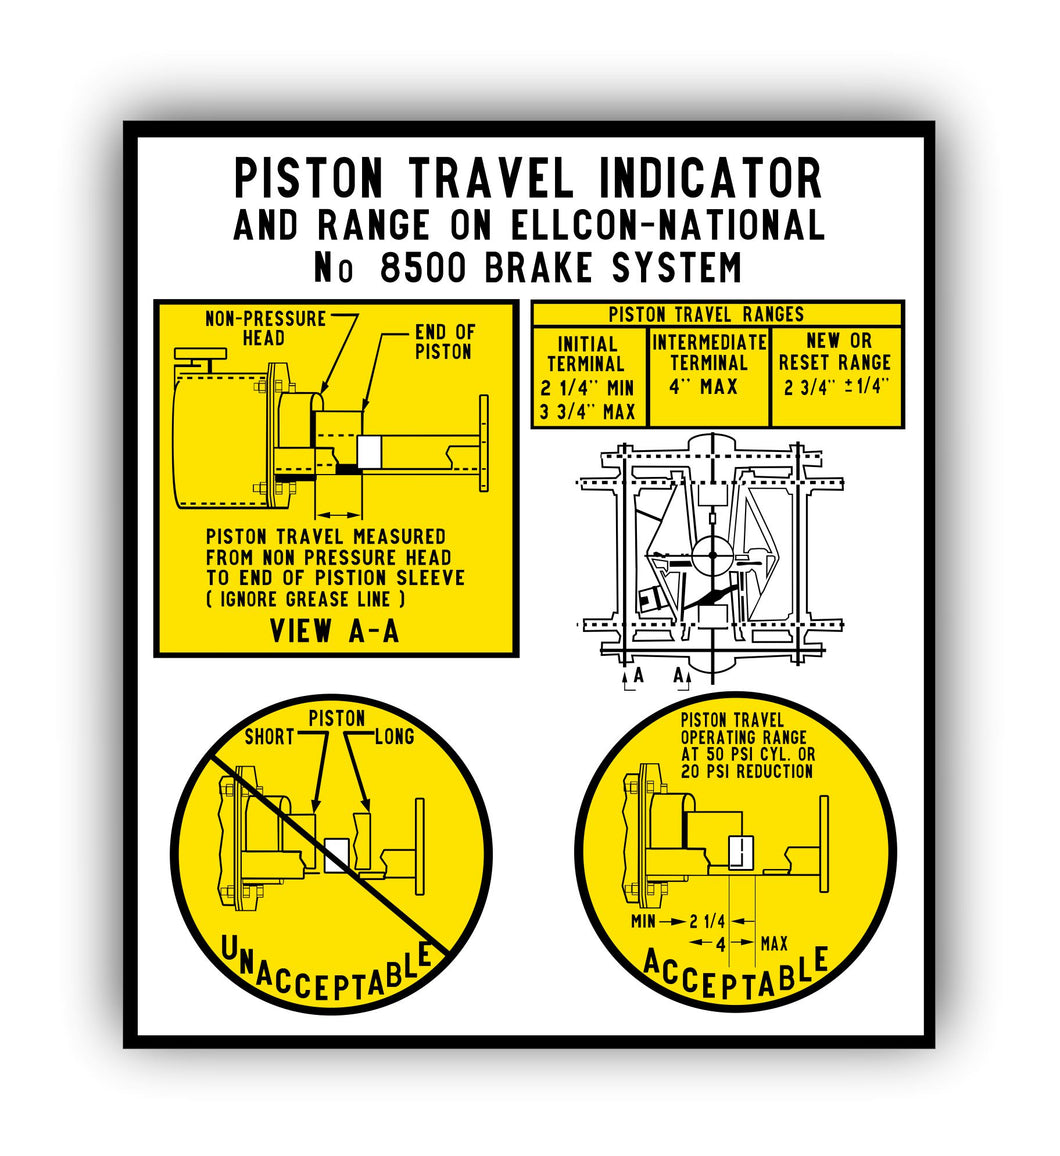 PISTON TRAVEL INDICATOR AND RANGE ON ELLCON-NATIONAL NO 8500 BRAKE SYSTEM